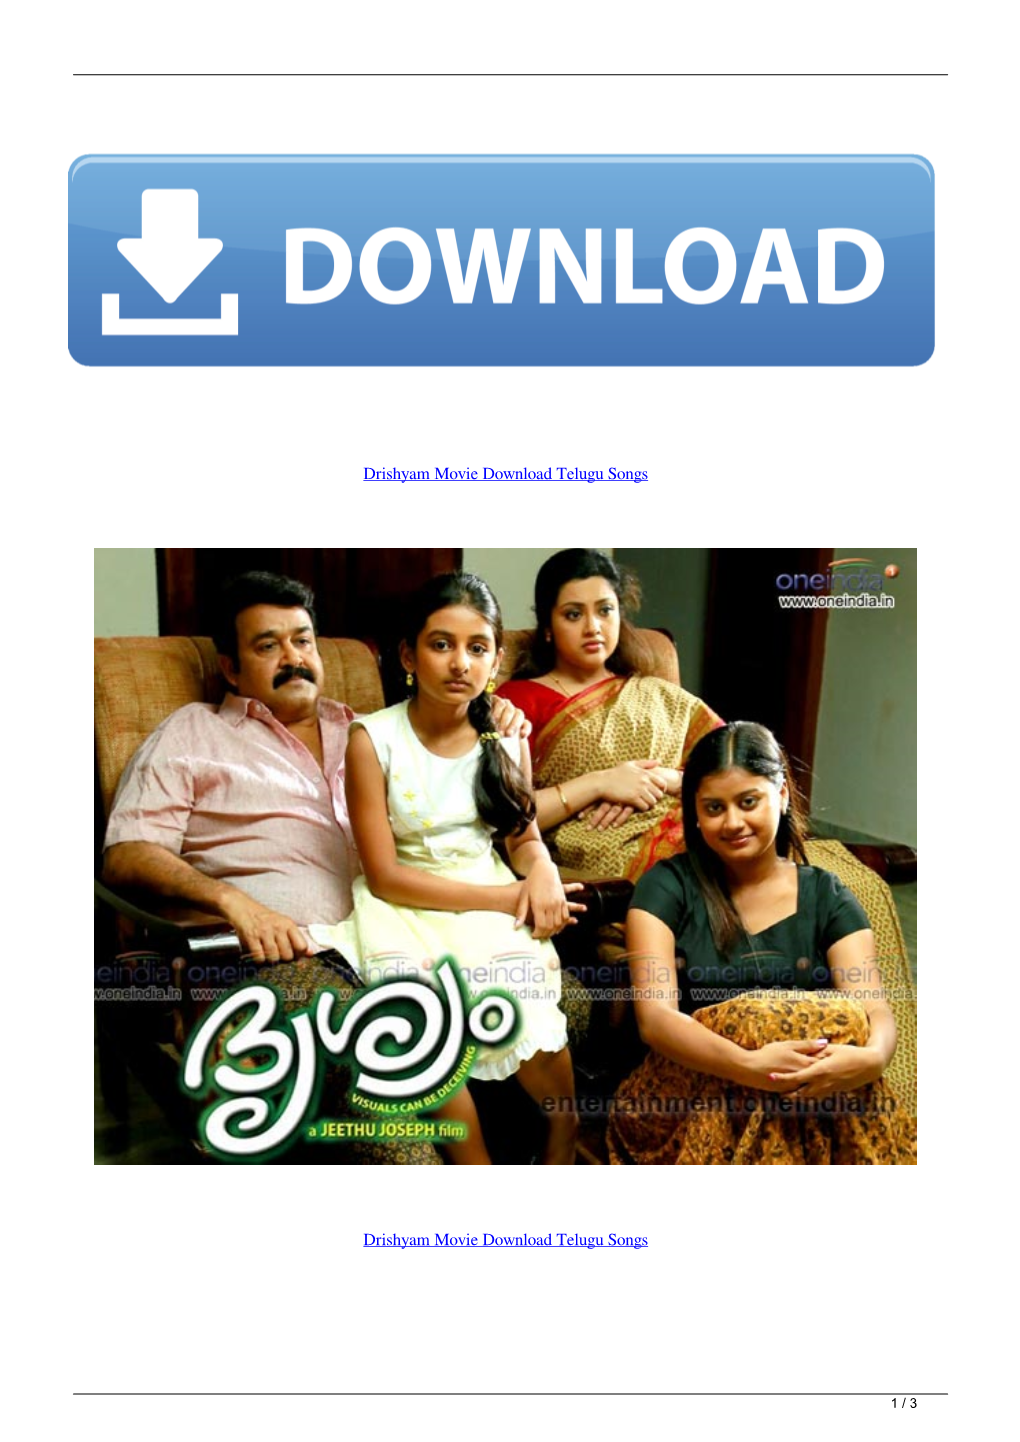 Drishyam Movie Download Telugu Songs